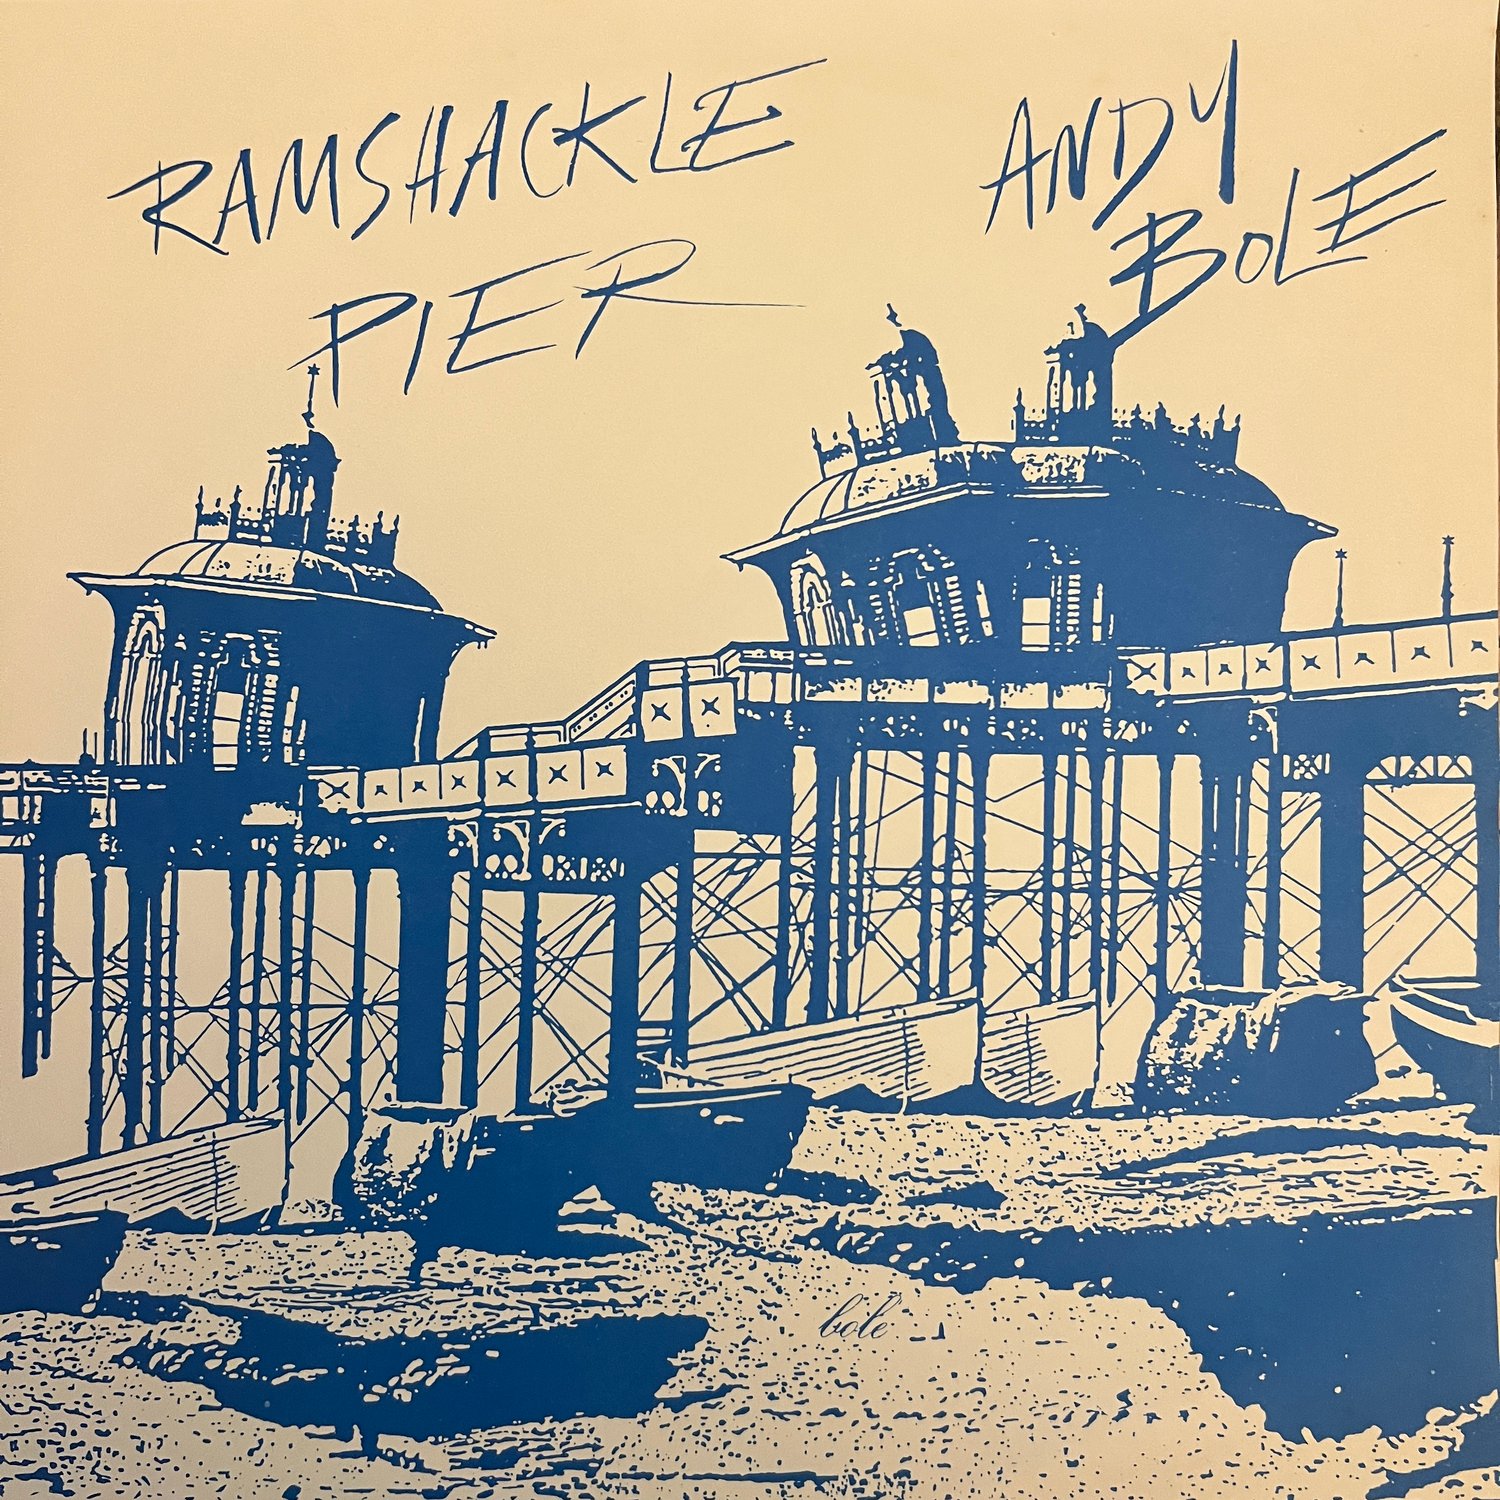 Image of Andy Bole - Ramshackle Pier